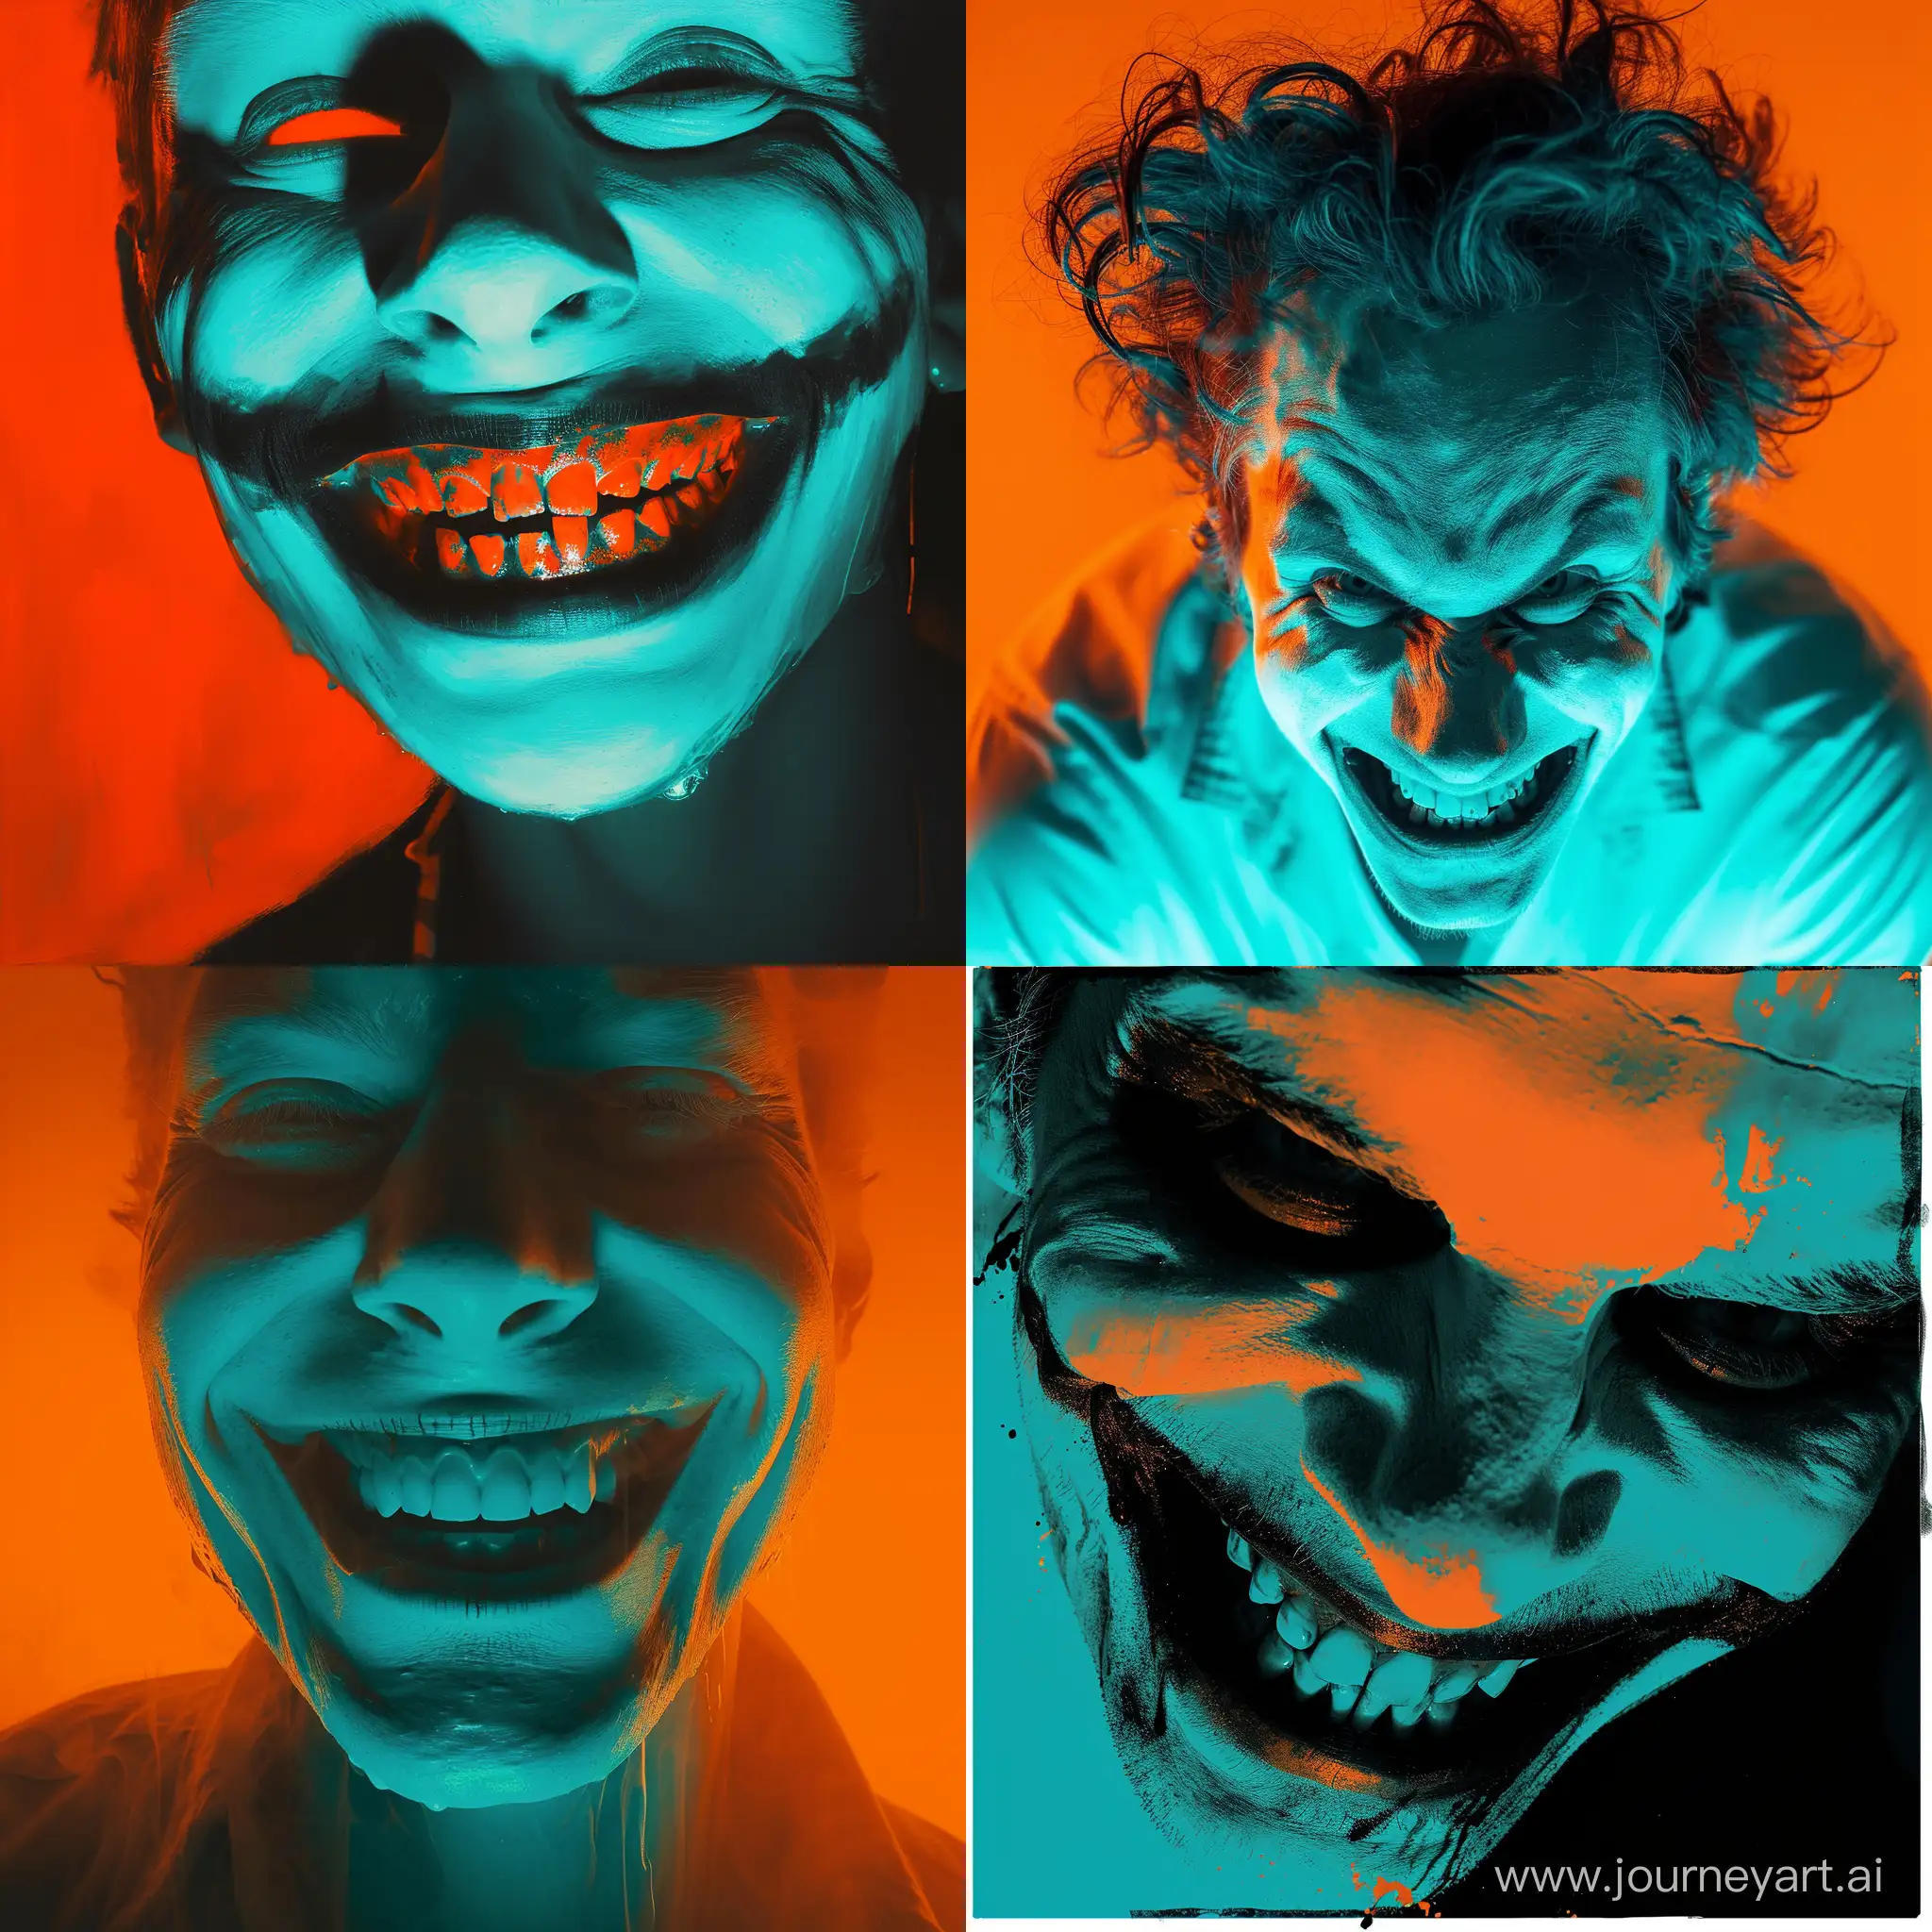 Mysterious-Grim-Smiles-Illuminated-in-Turquoise-and-Orange-Light